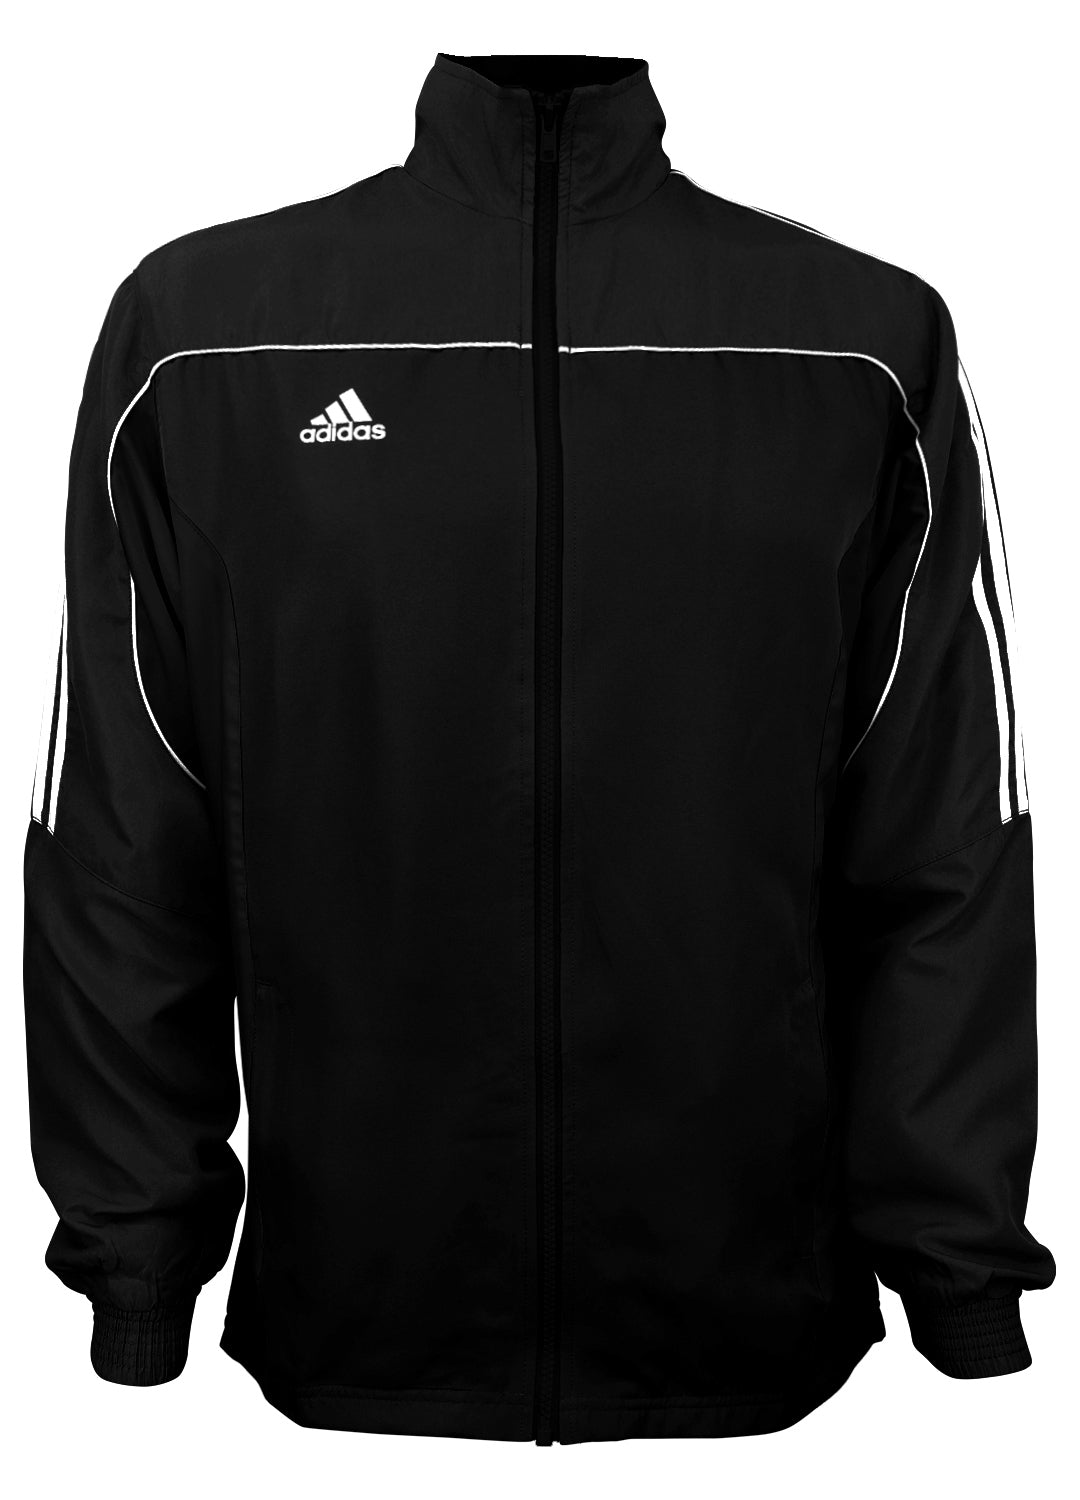 adidas black and white striped jacket